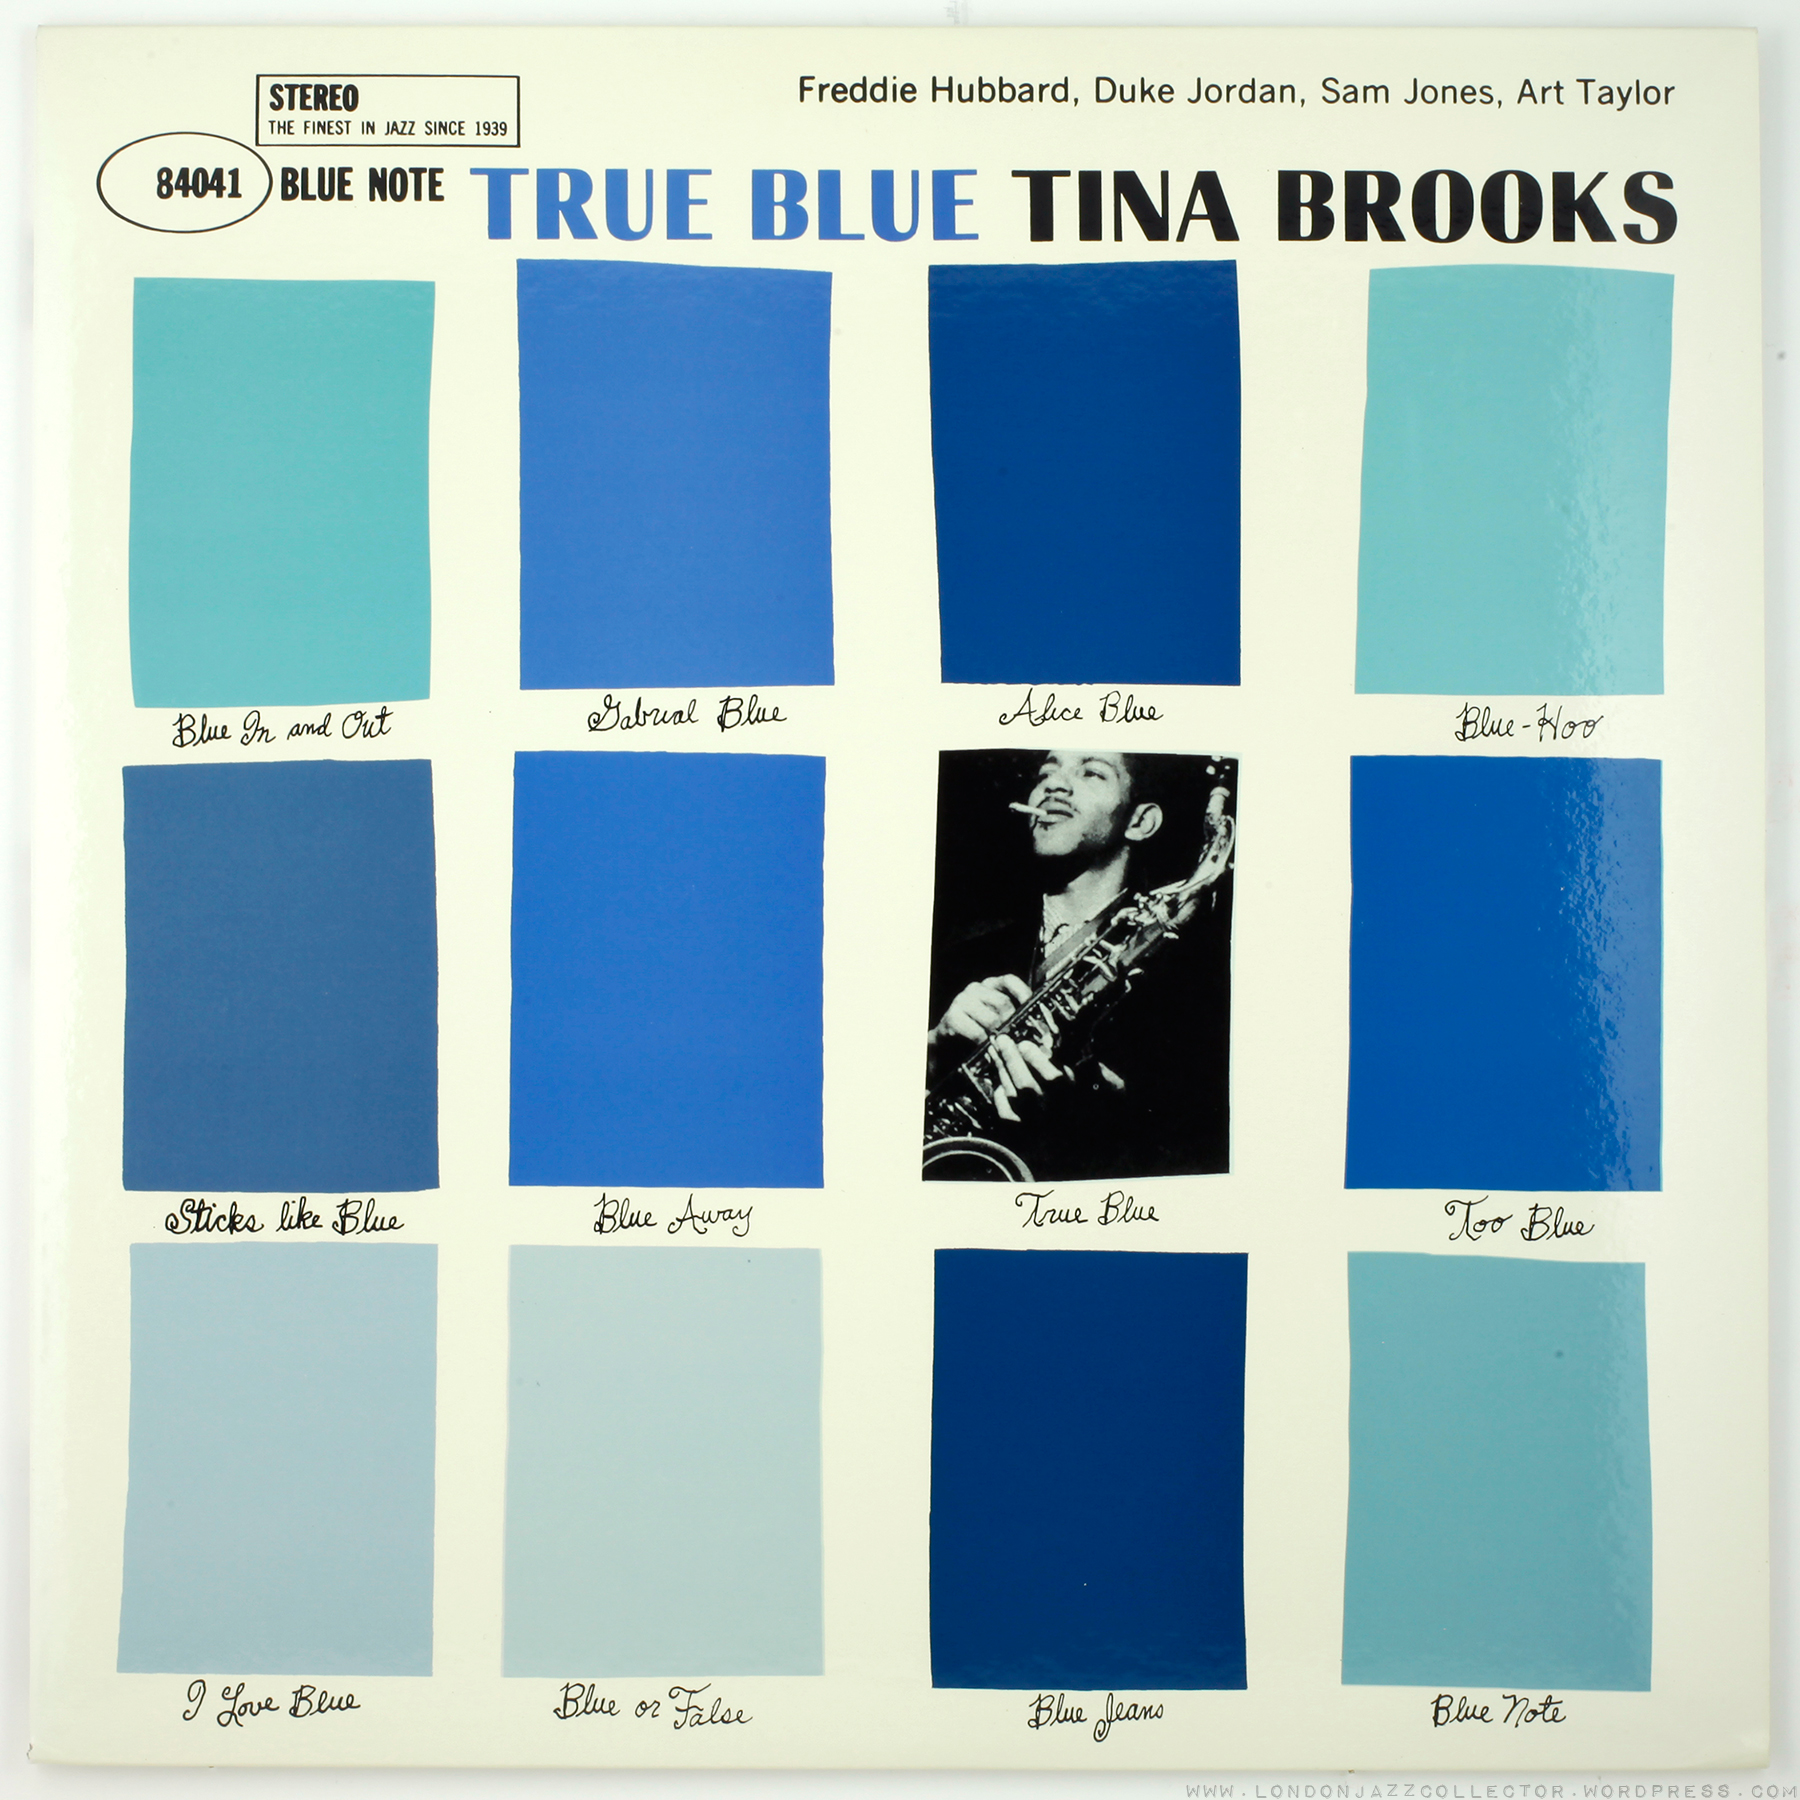 tina-brooks-true-blue-cover-jp-1800-ljc.